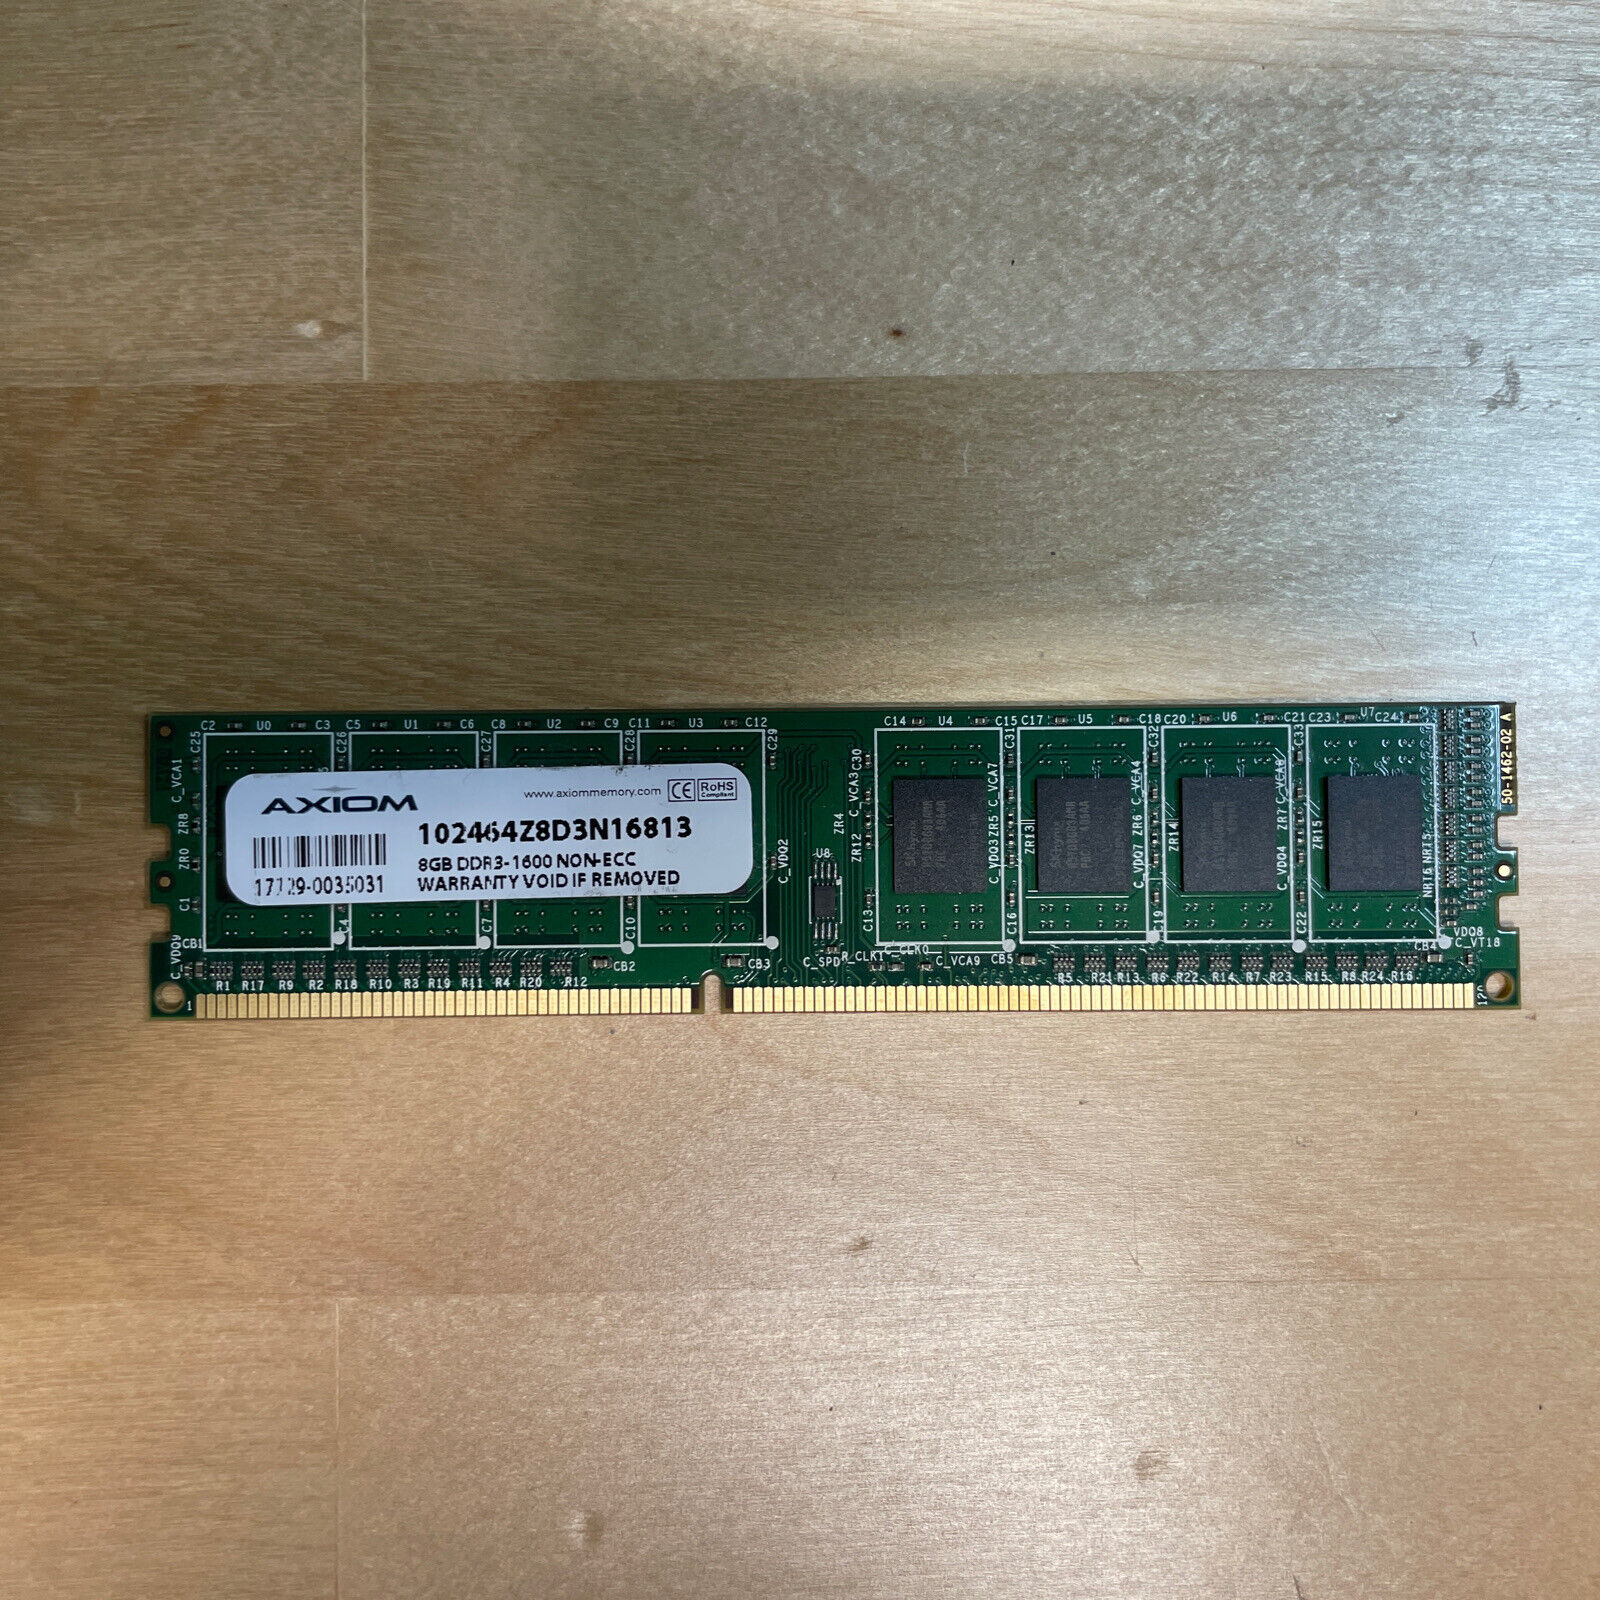 8GB DDR3 PC3 DESKTOP MEMORY AXIOM 8GB DDR3-1600 NON-ECC 10246Z8D3N16813